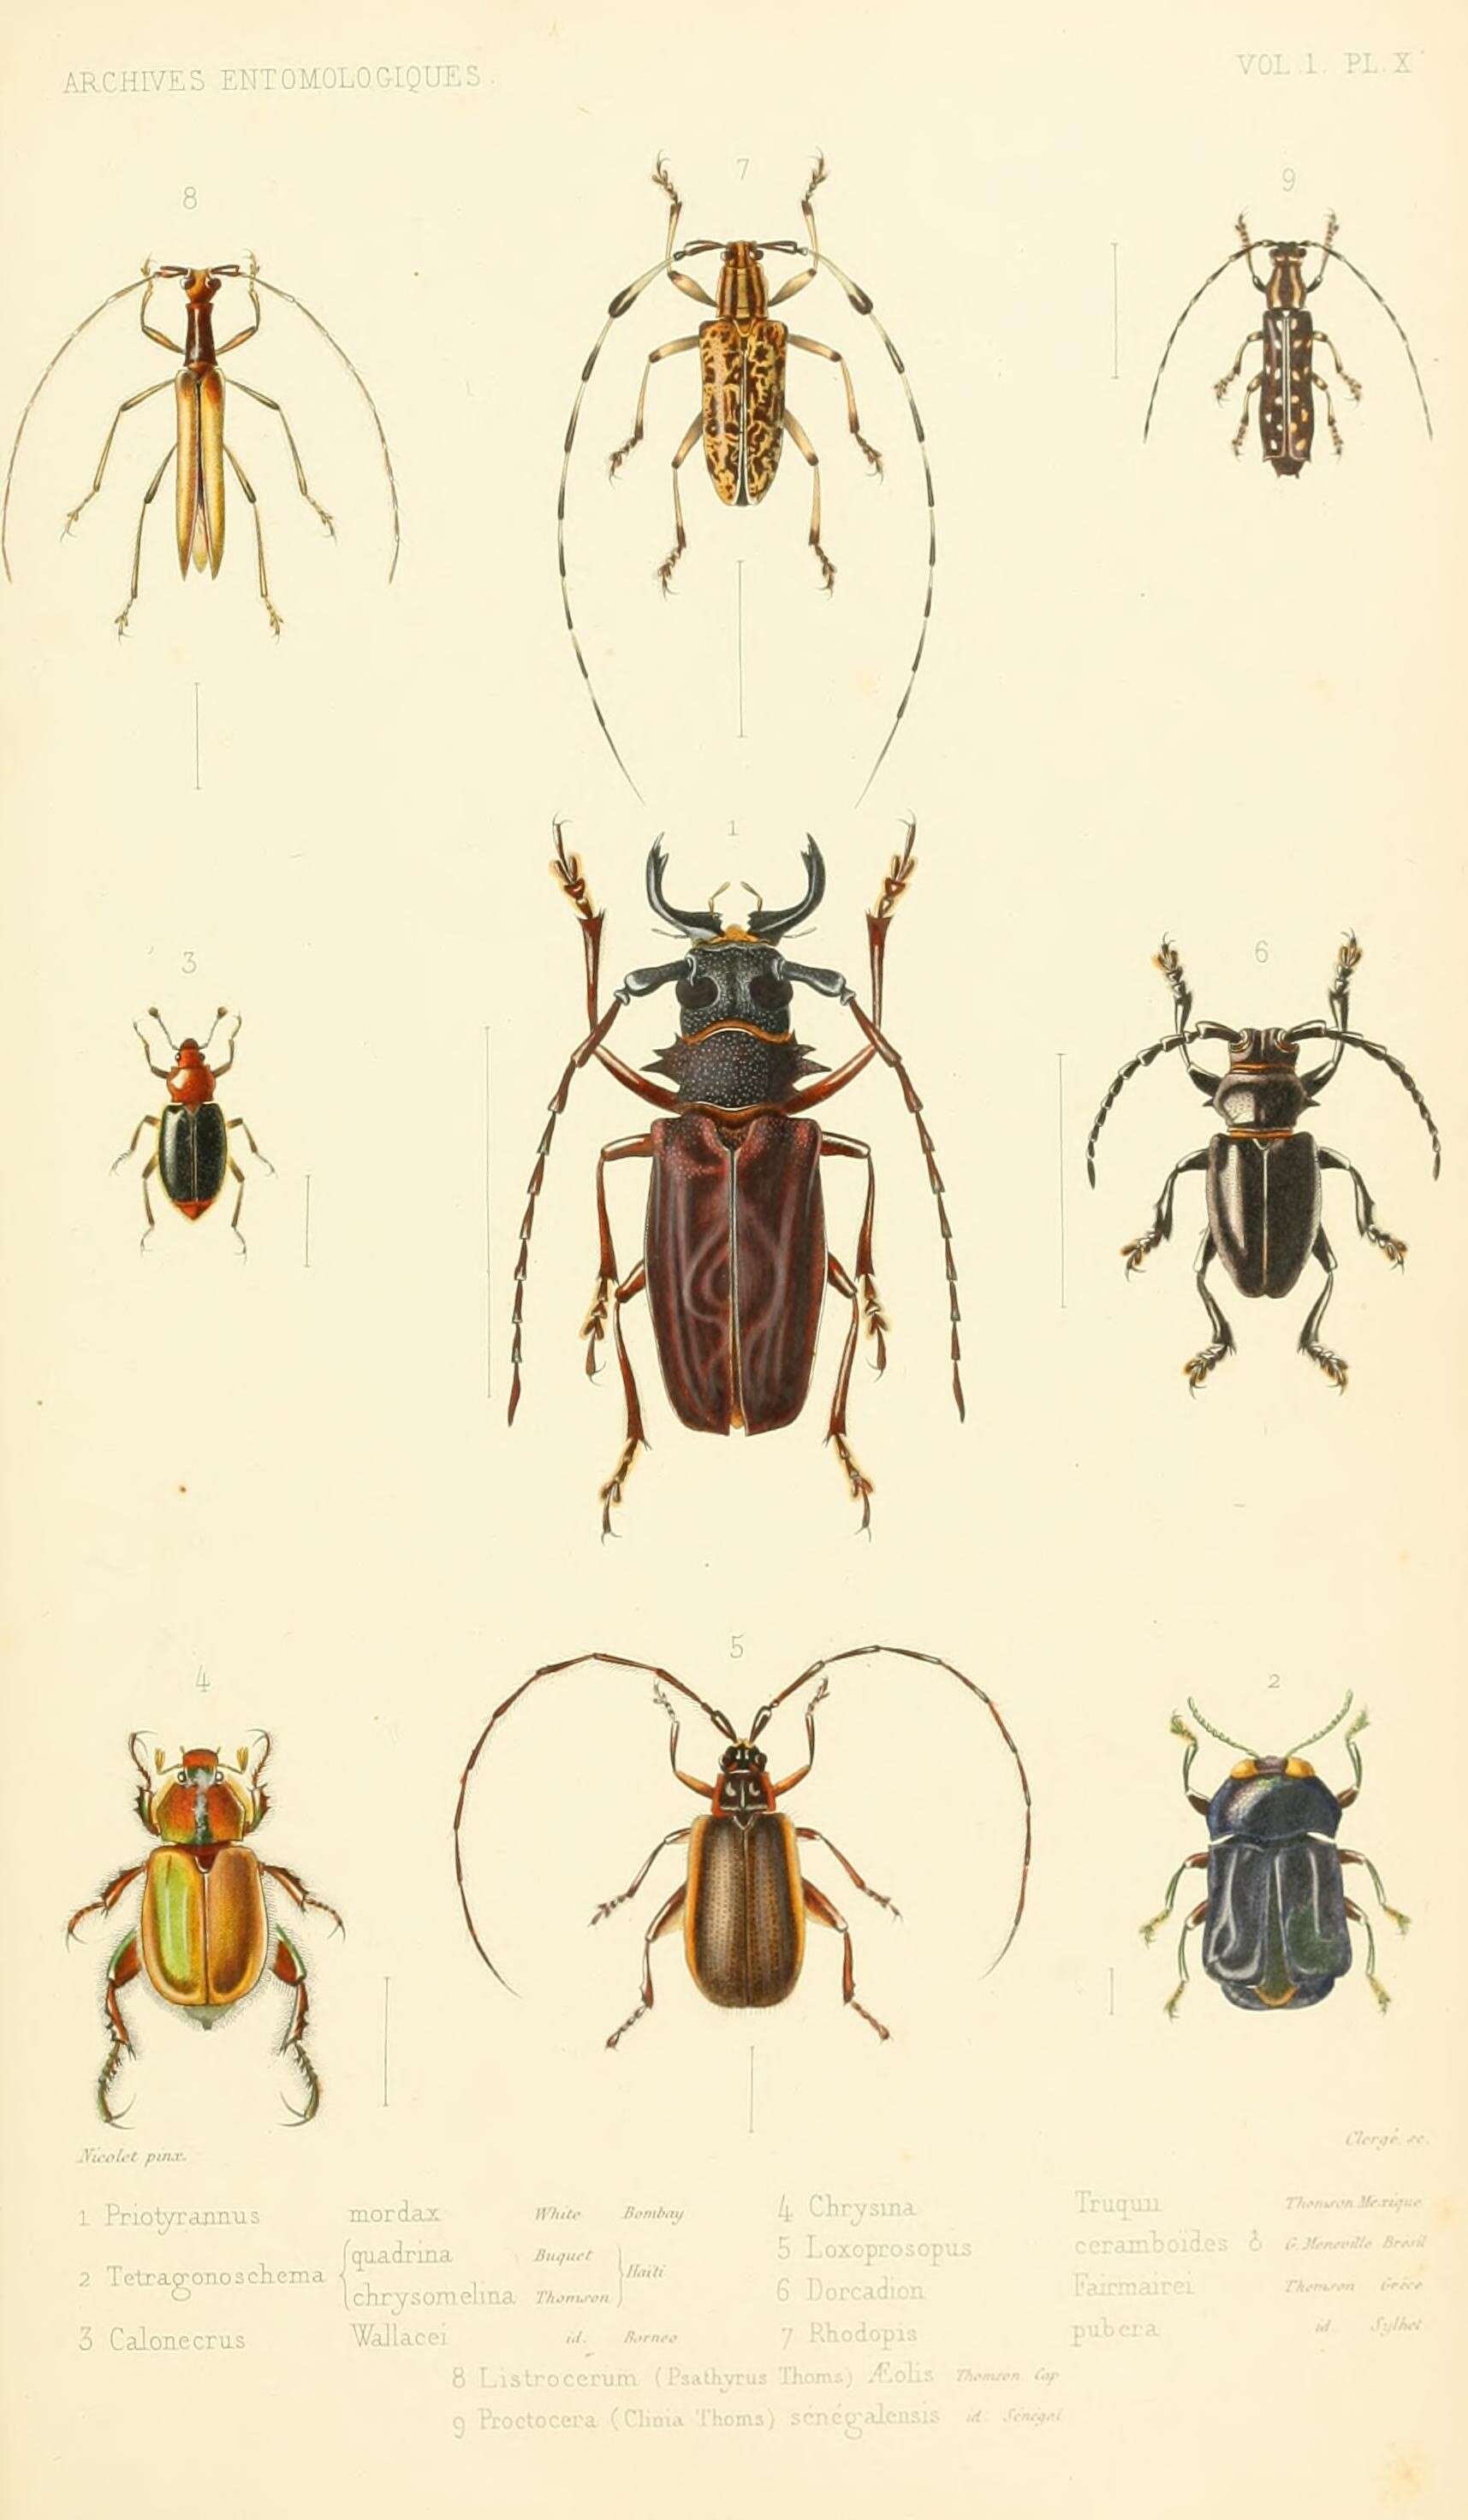 Image of Priotyrannus mordax (White 1853)